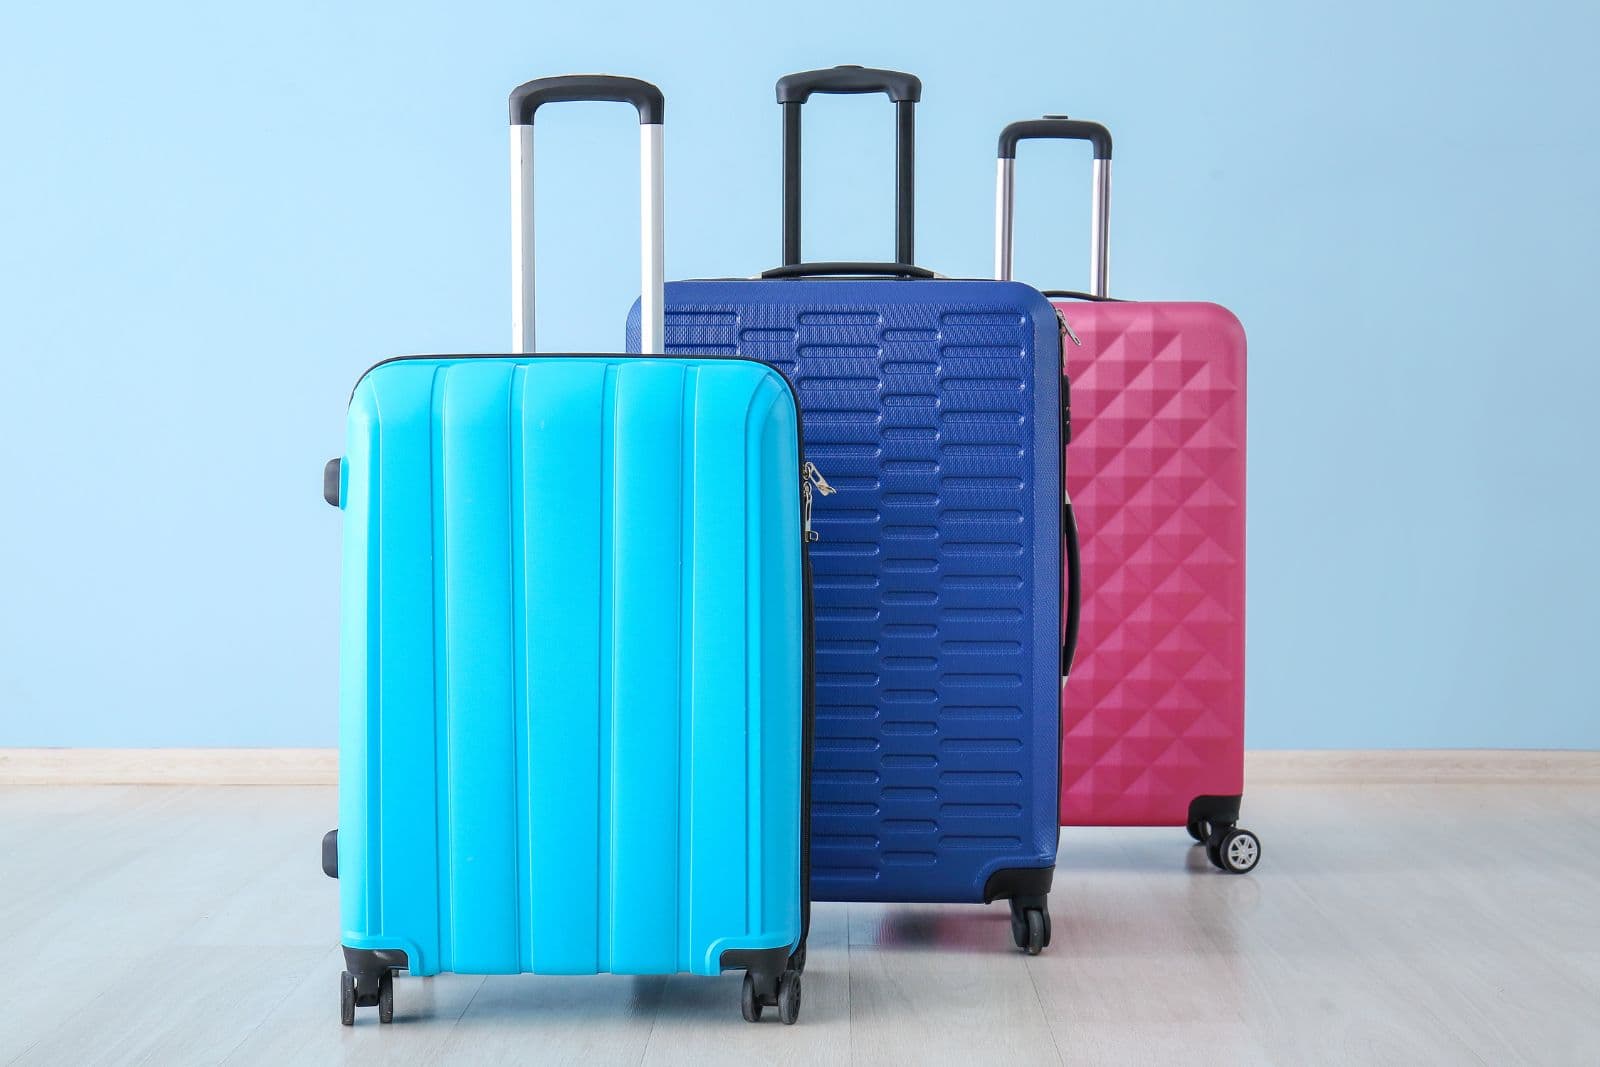 Pine Kids Trolley Luggage Bags Blue - 22 inch [+info]